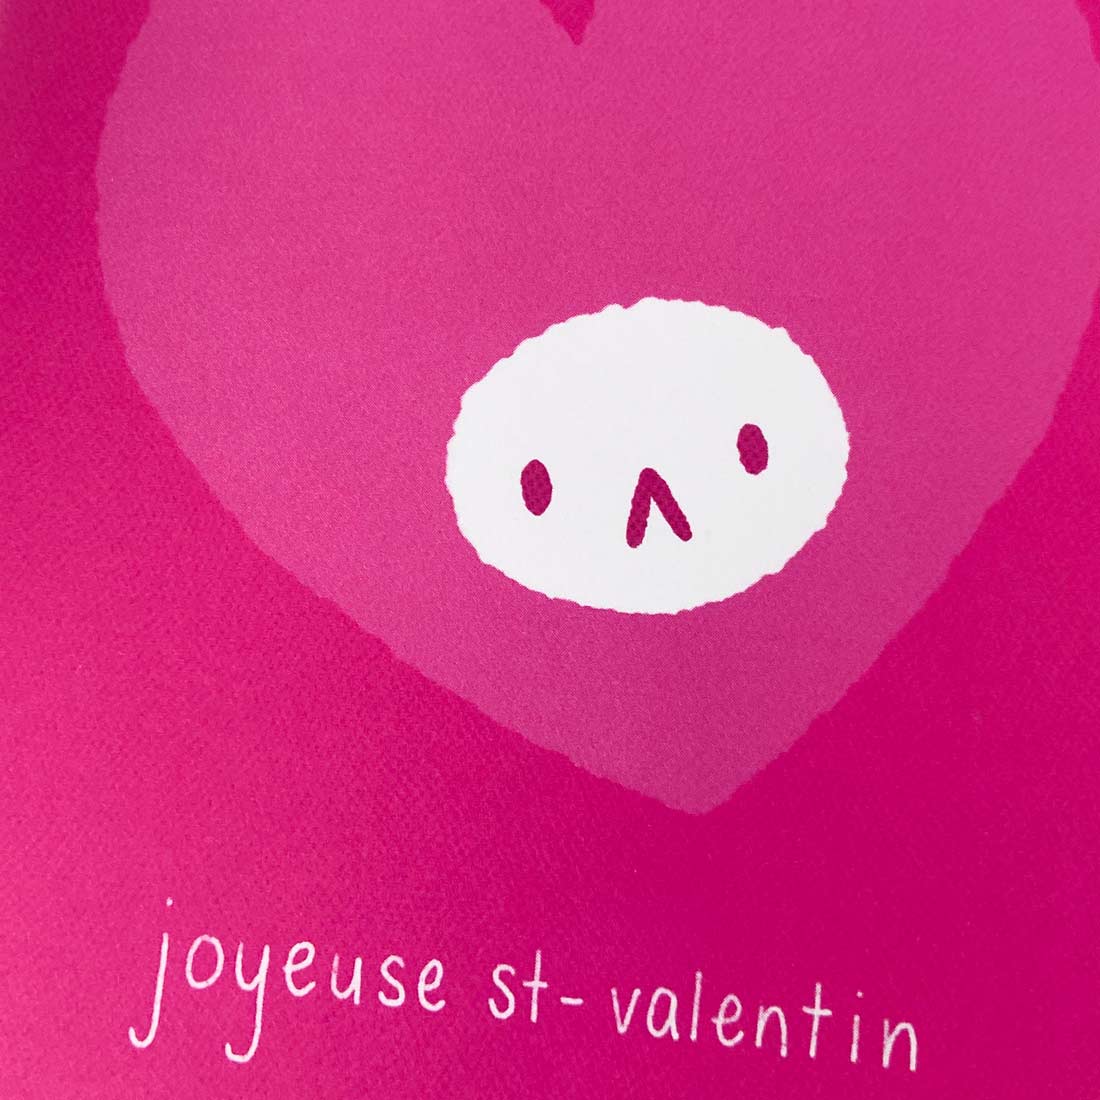 Happy Valentine’s Day Card